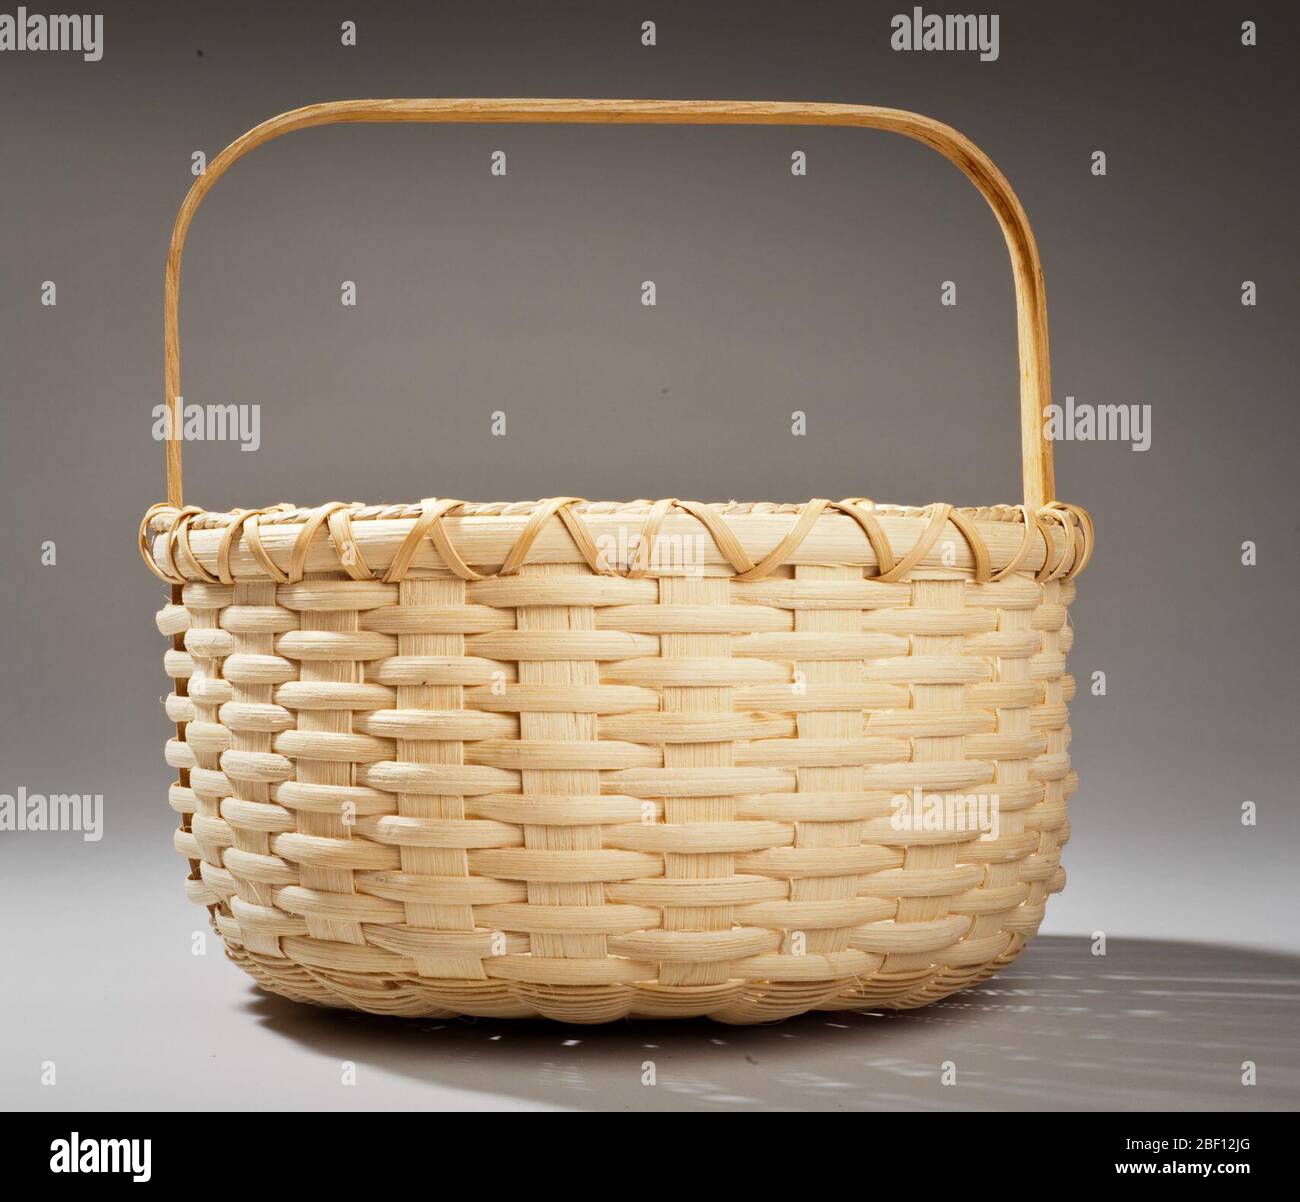 https://c8.alamy.com/comp/2BF12JG/handmade-oval-basket-with-square-handle-2BF12JG.jpg